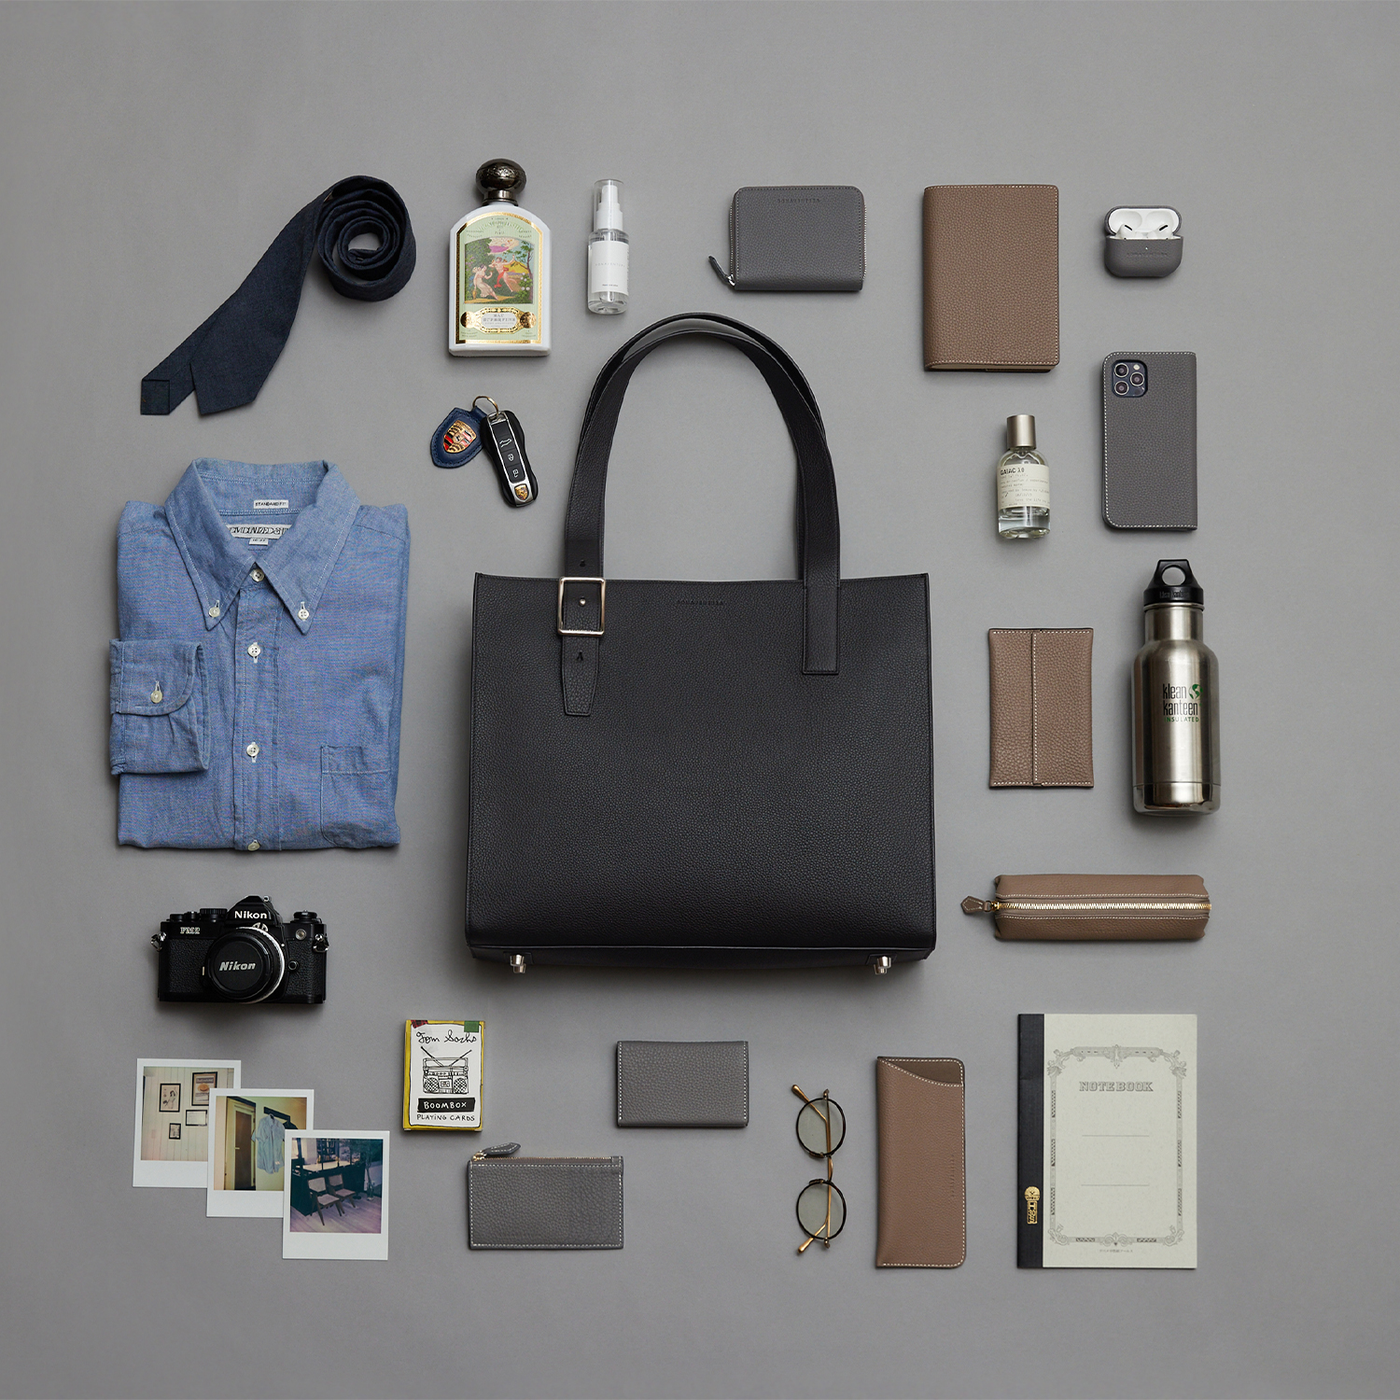 Organized BONAVENTURA leather travel bag with travel essentials.